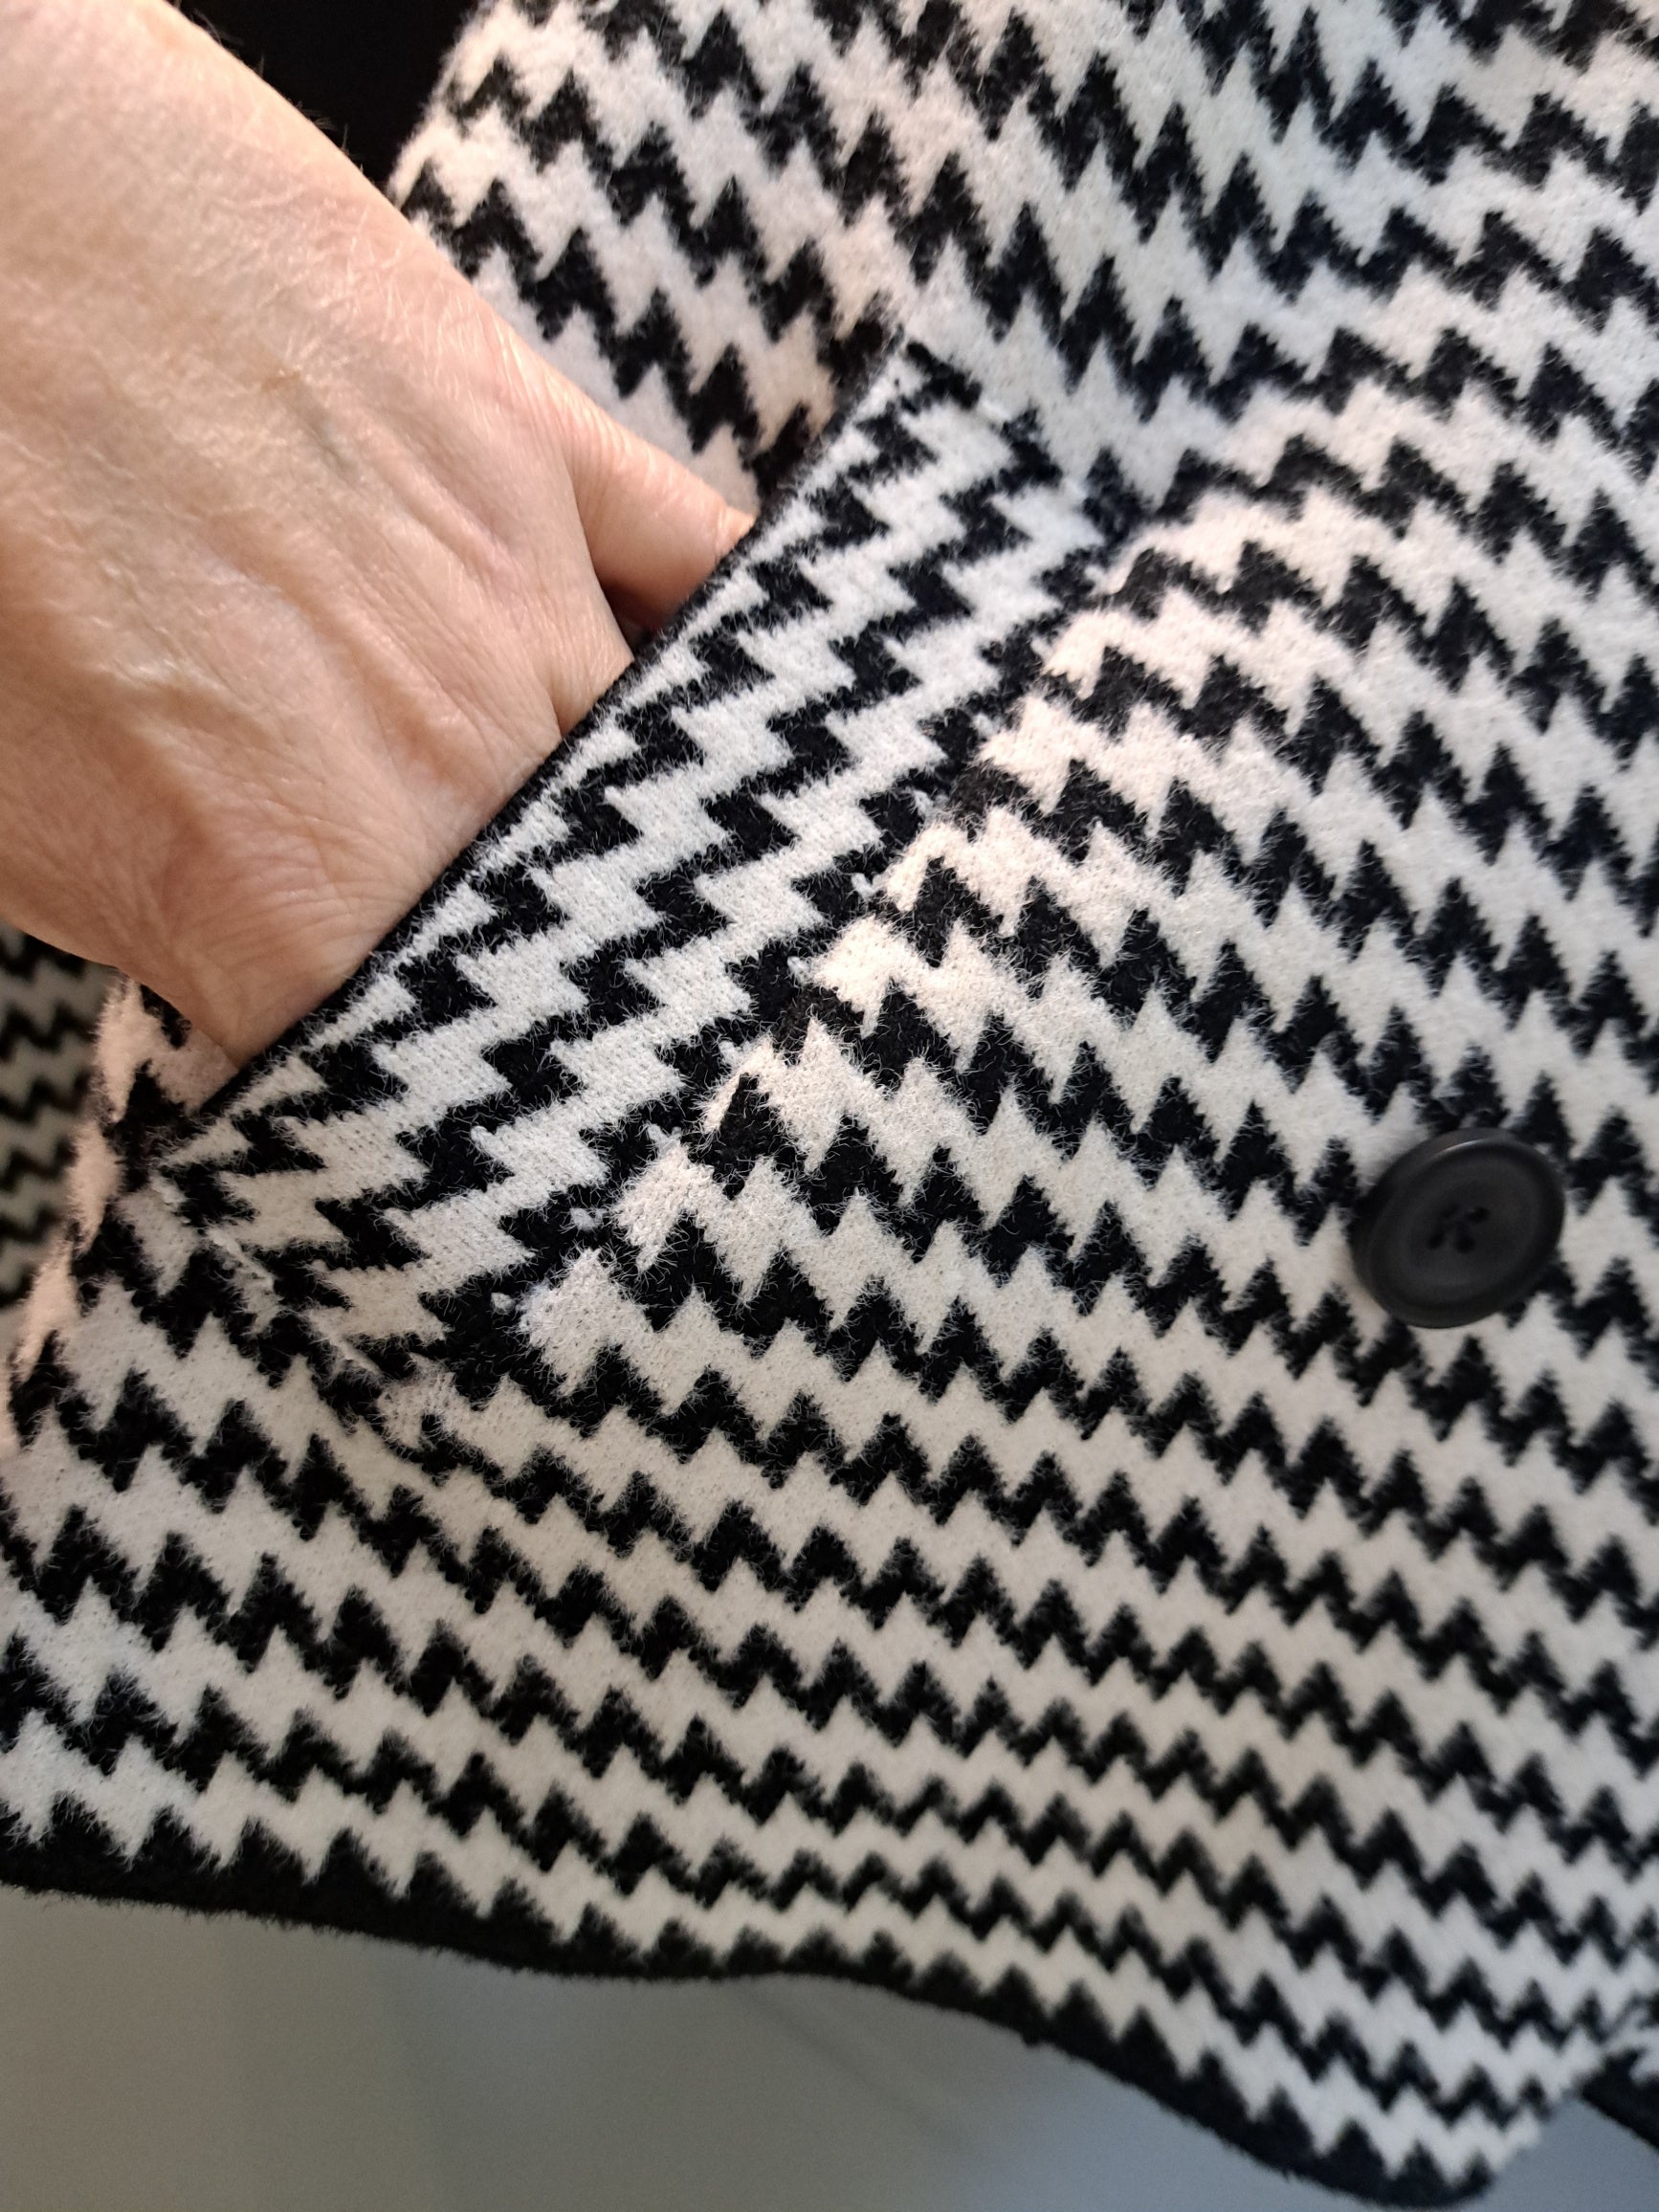 Double breasted knit jacket - Maya Maya Ltd